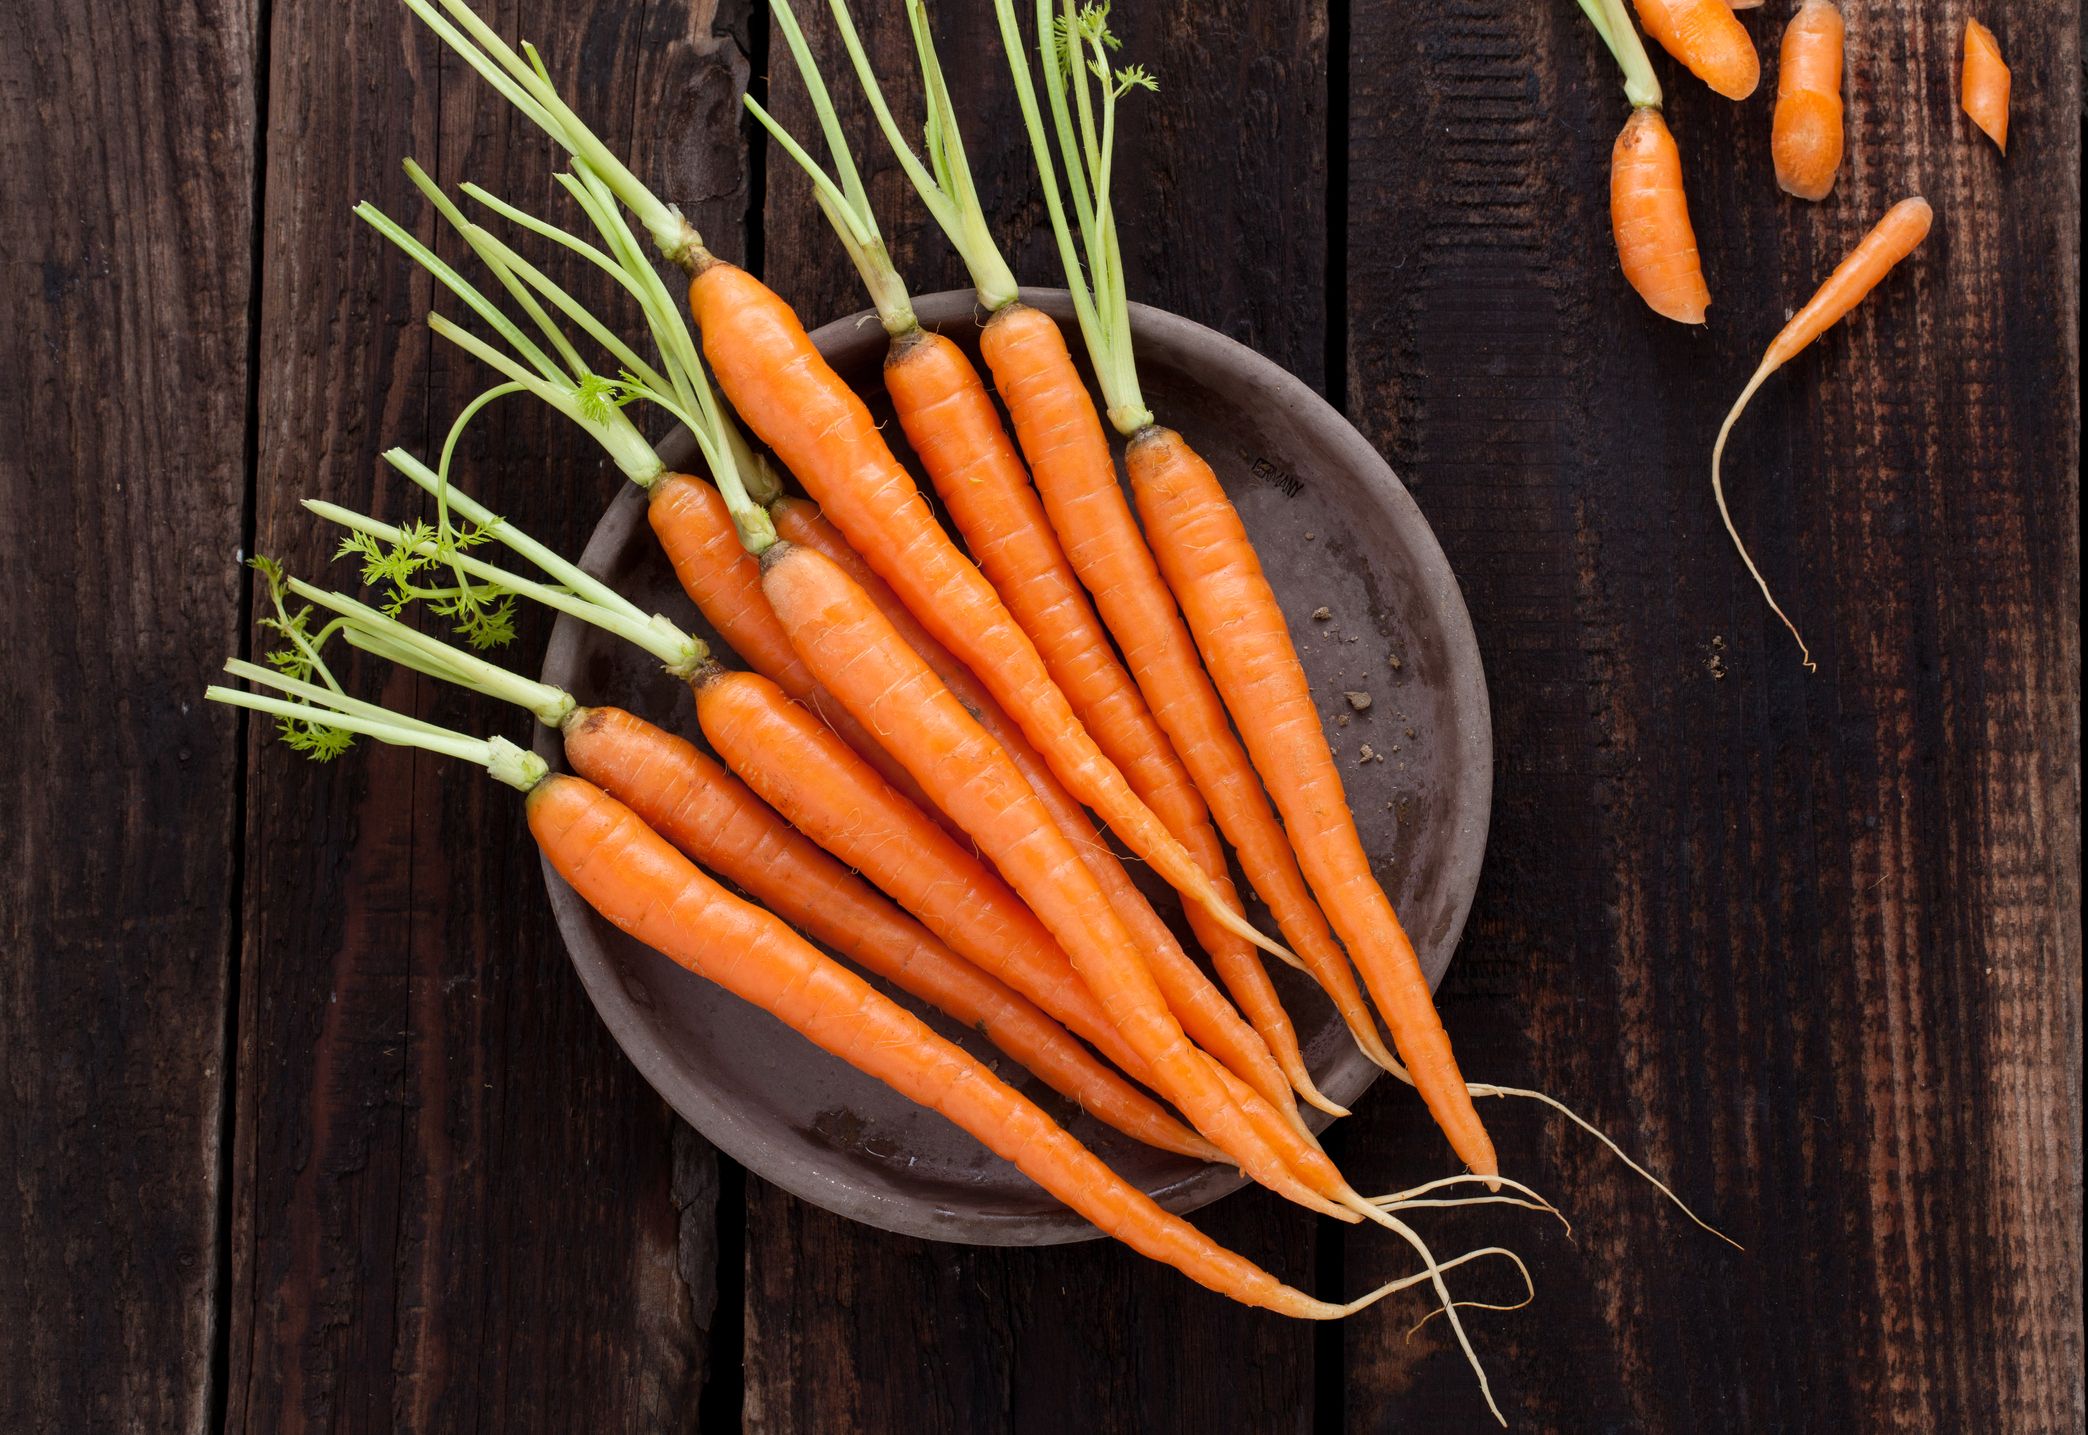 The Secret To Making Carrots Sweeter Is Shredding Them